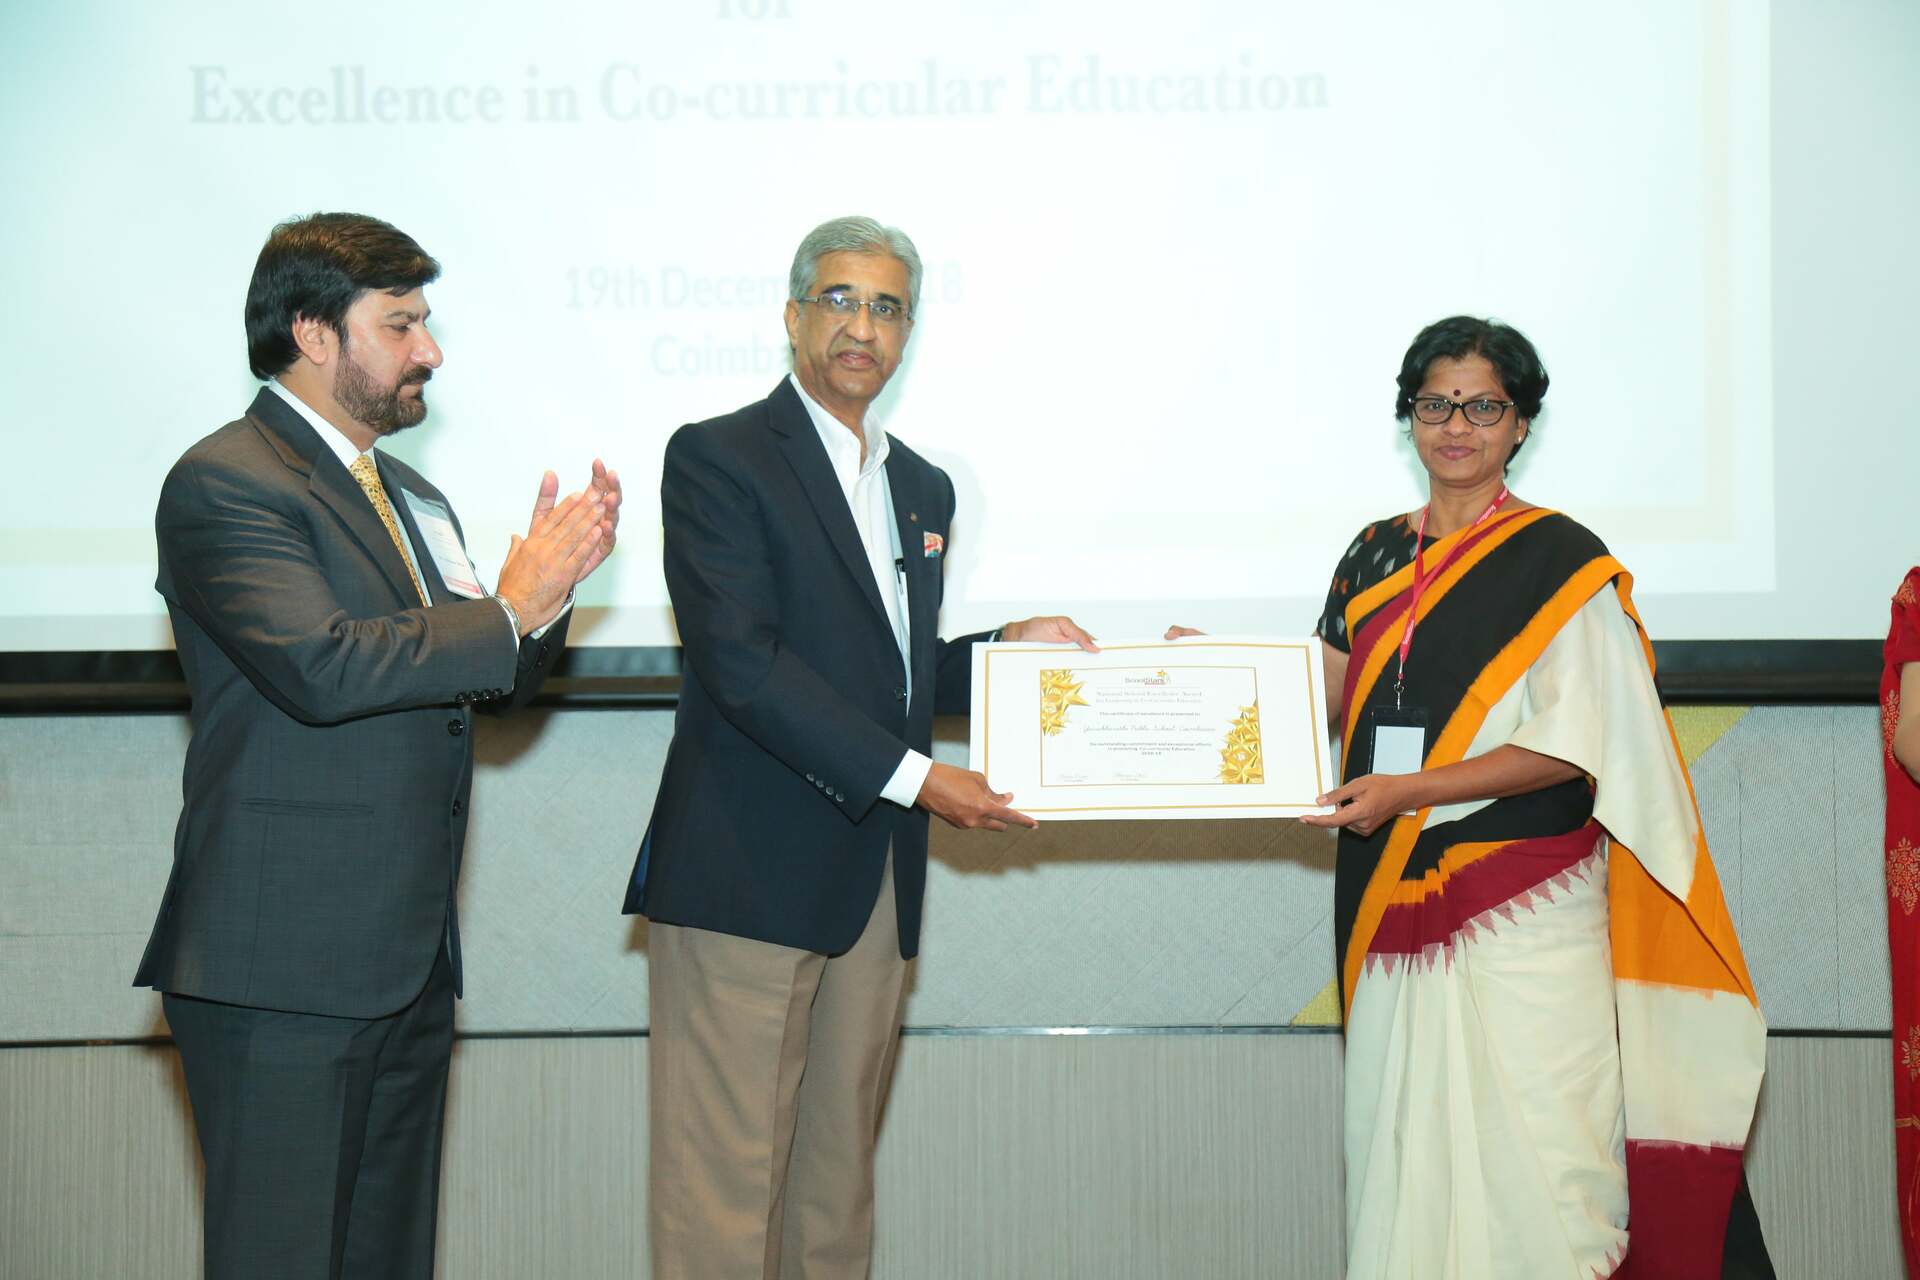 Excellence in Co-curricular Education | National Leadership Award | YBPS